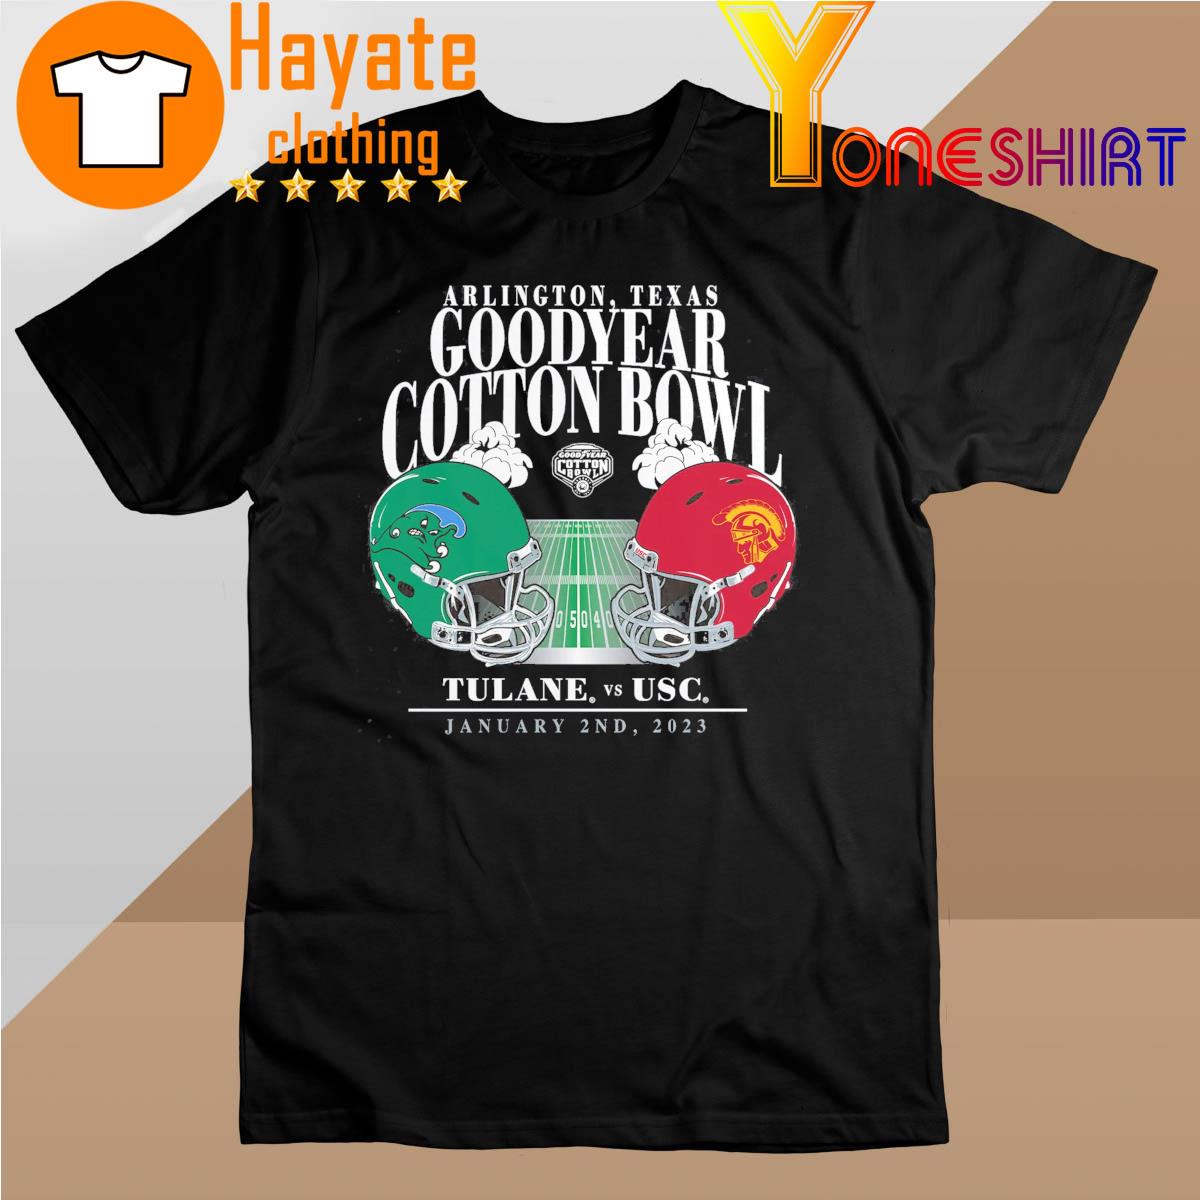 USC Trojans vs. Tulane Green Wave Fanatics Branded 2023 Cotton Bowl Matchup Old School T-Shirt